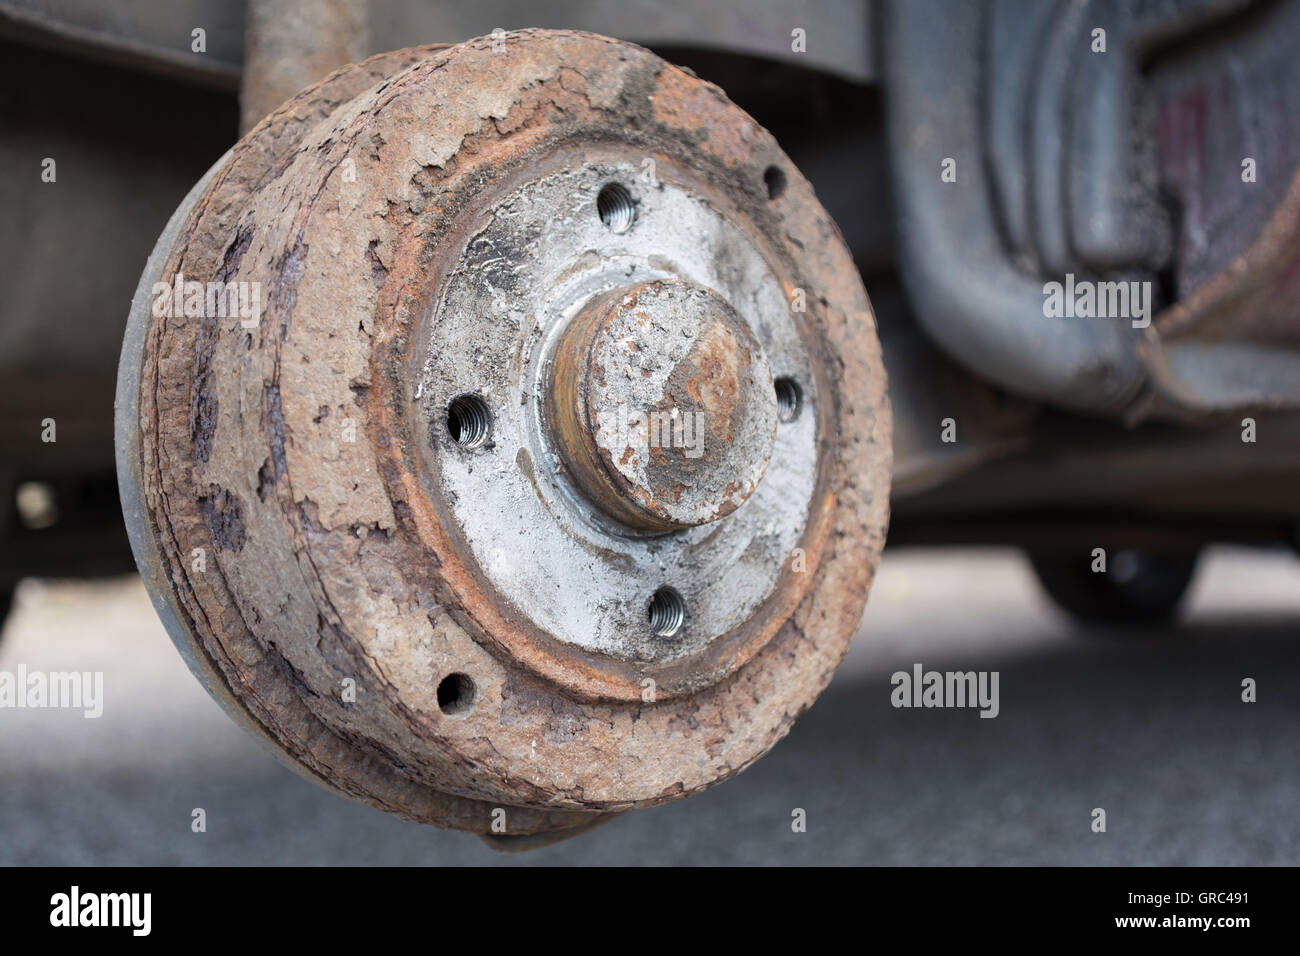 Closeup Of An Old Rusty Brake Drum Stock Photo - Alamy